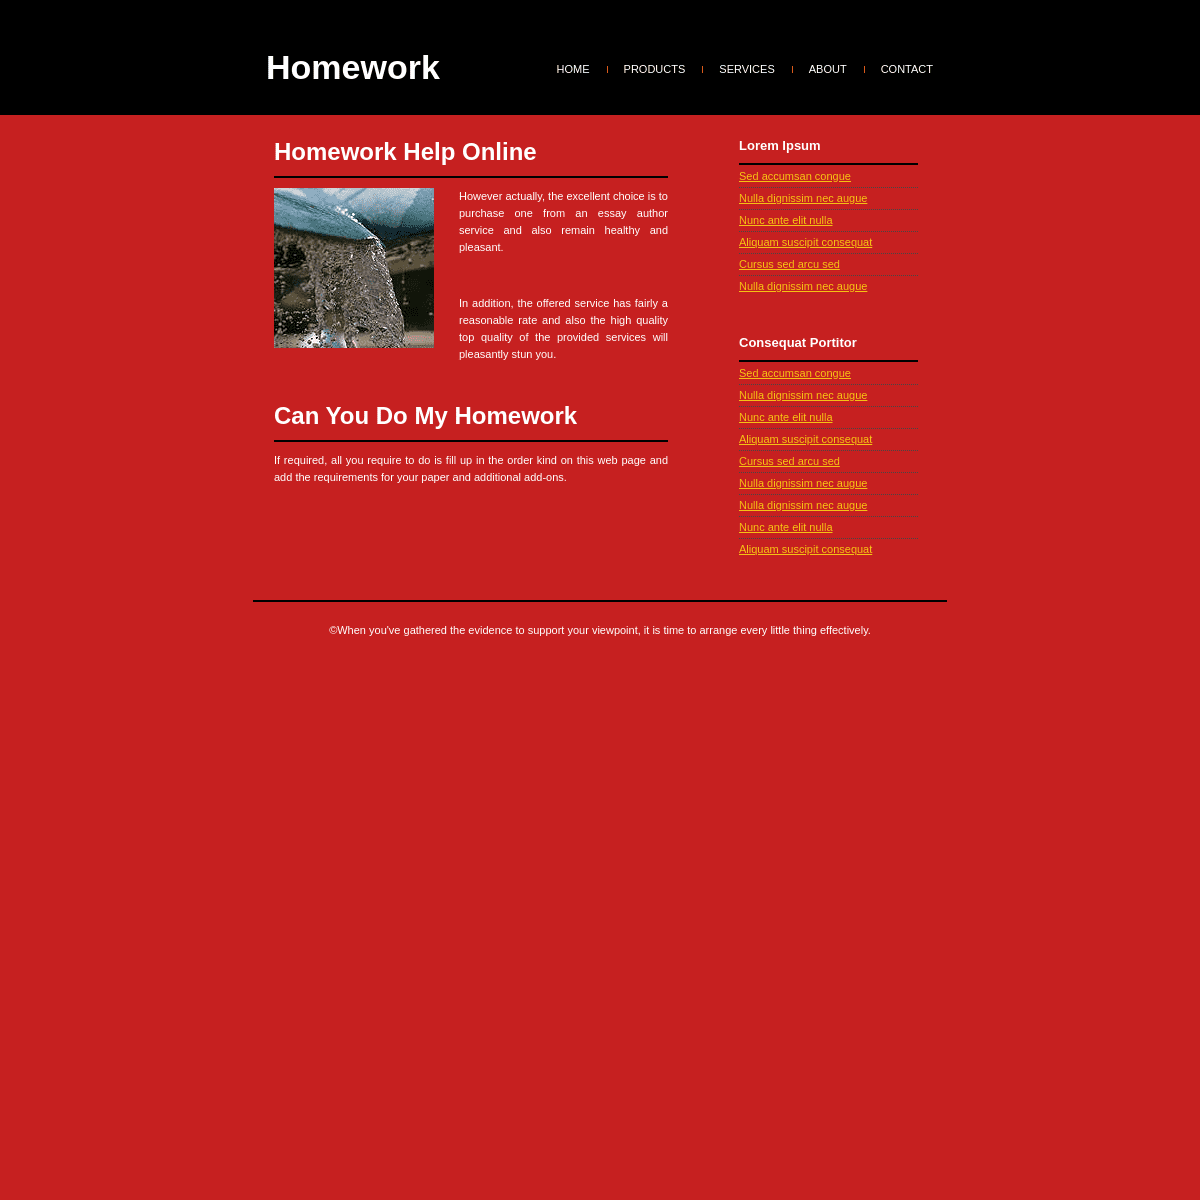 A complete backup of https://homeworkihelp.com